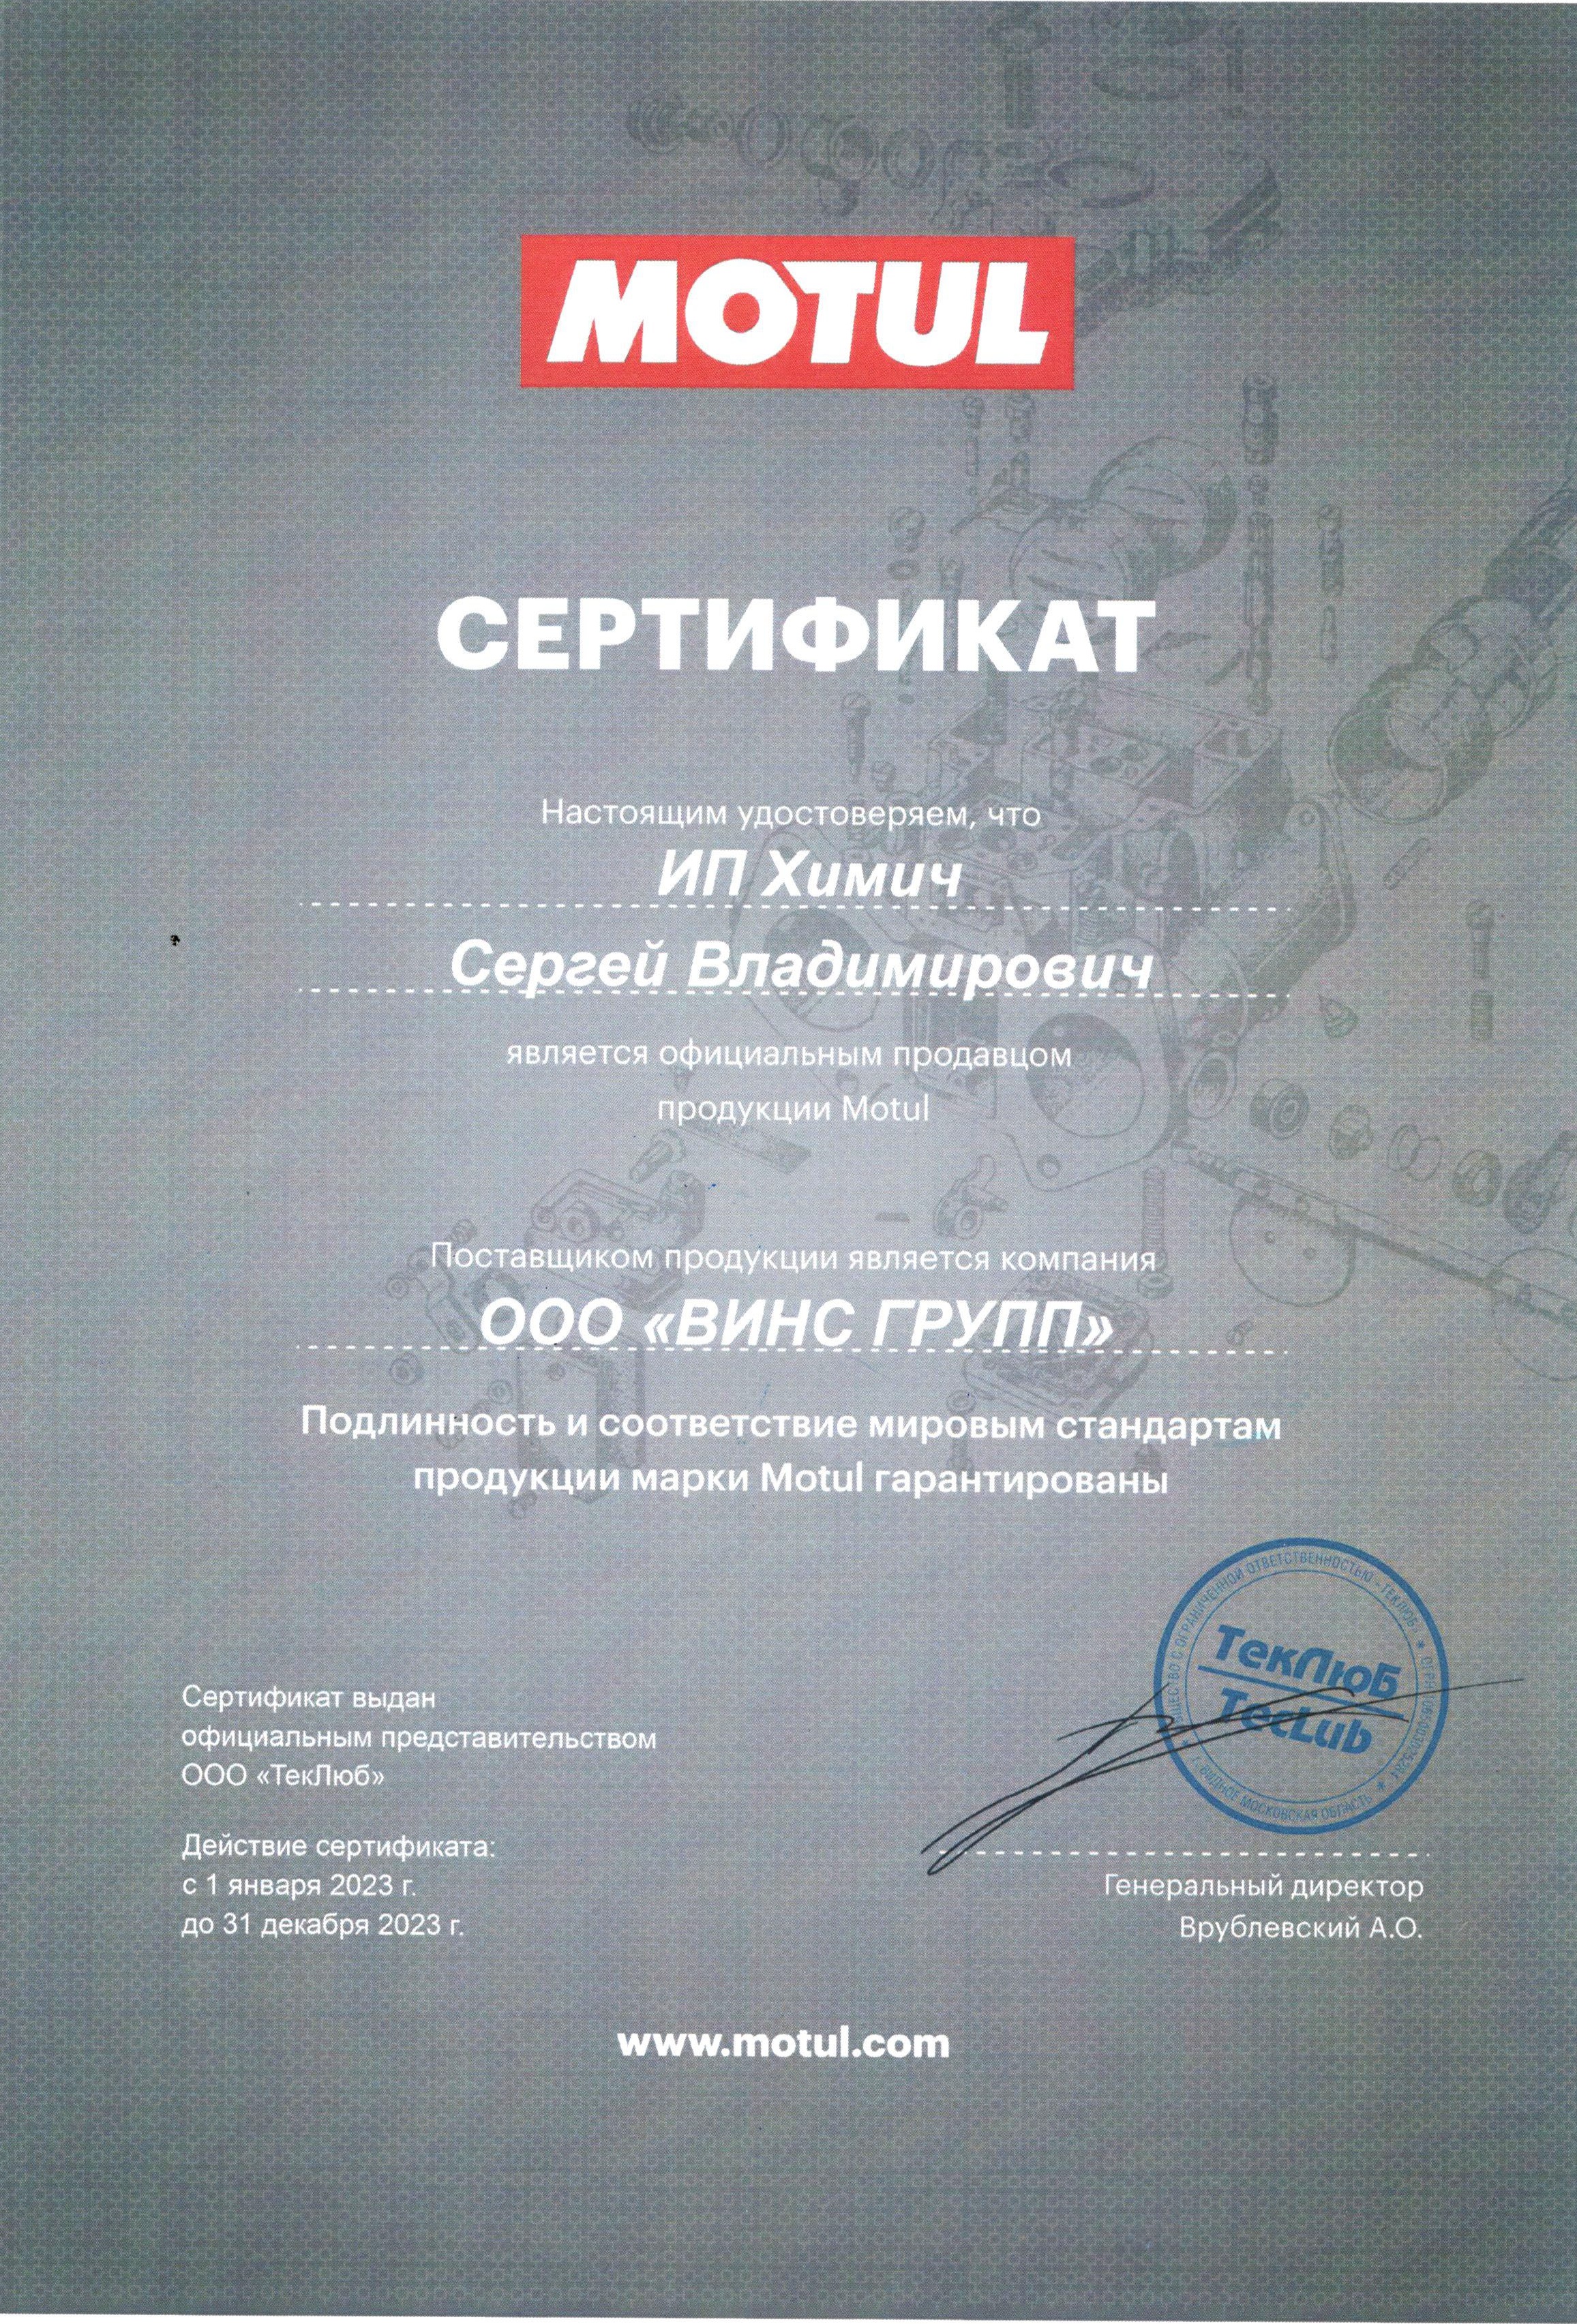 сертификат Motul.jpg